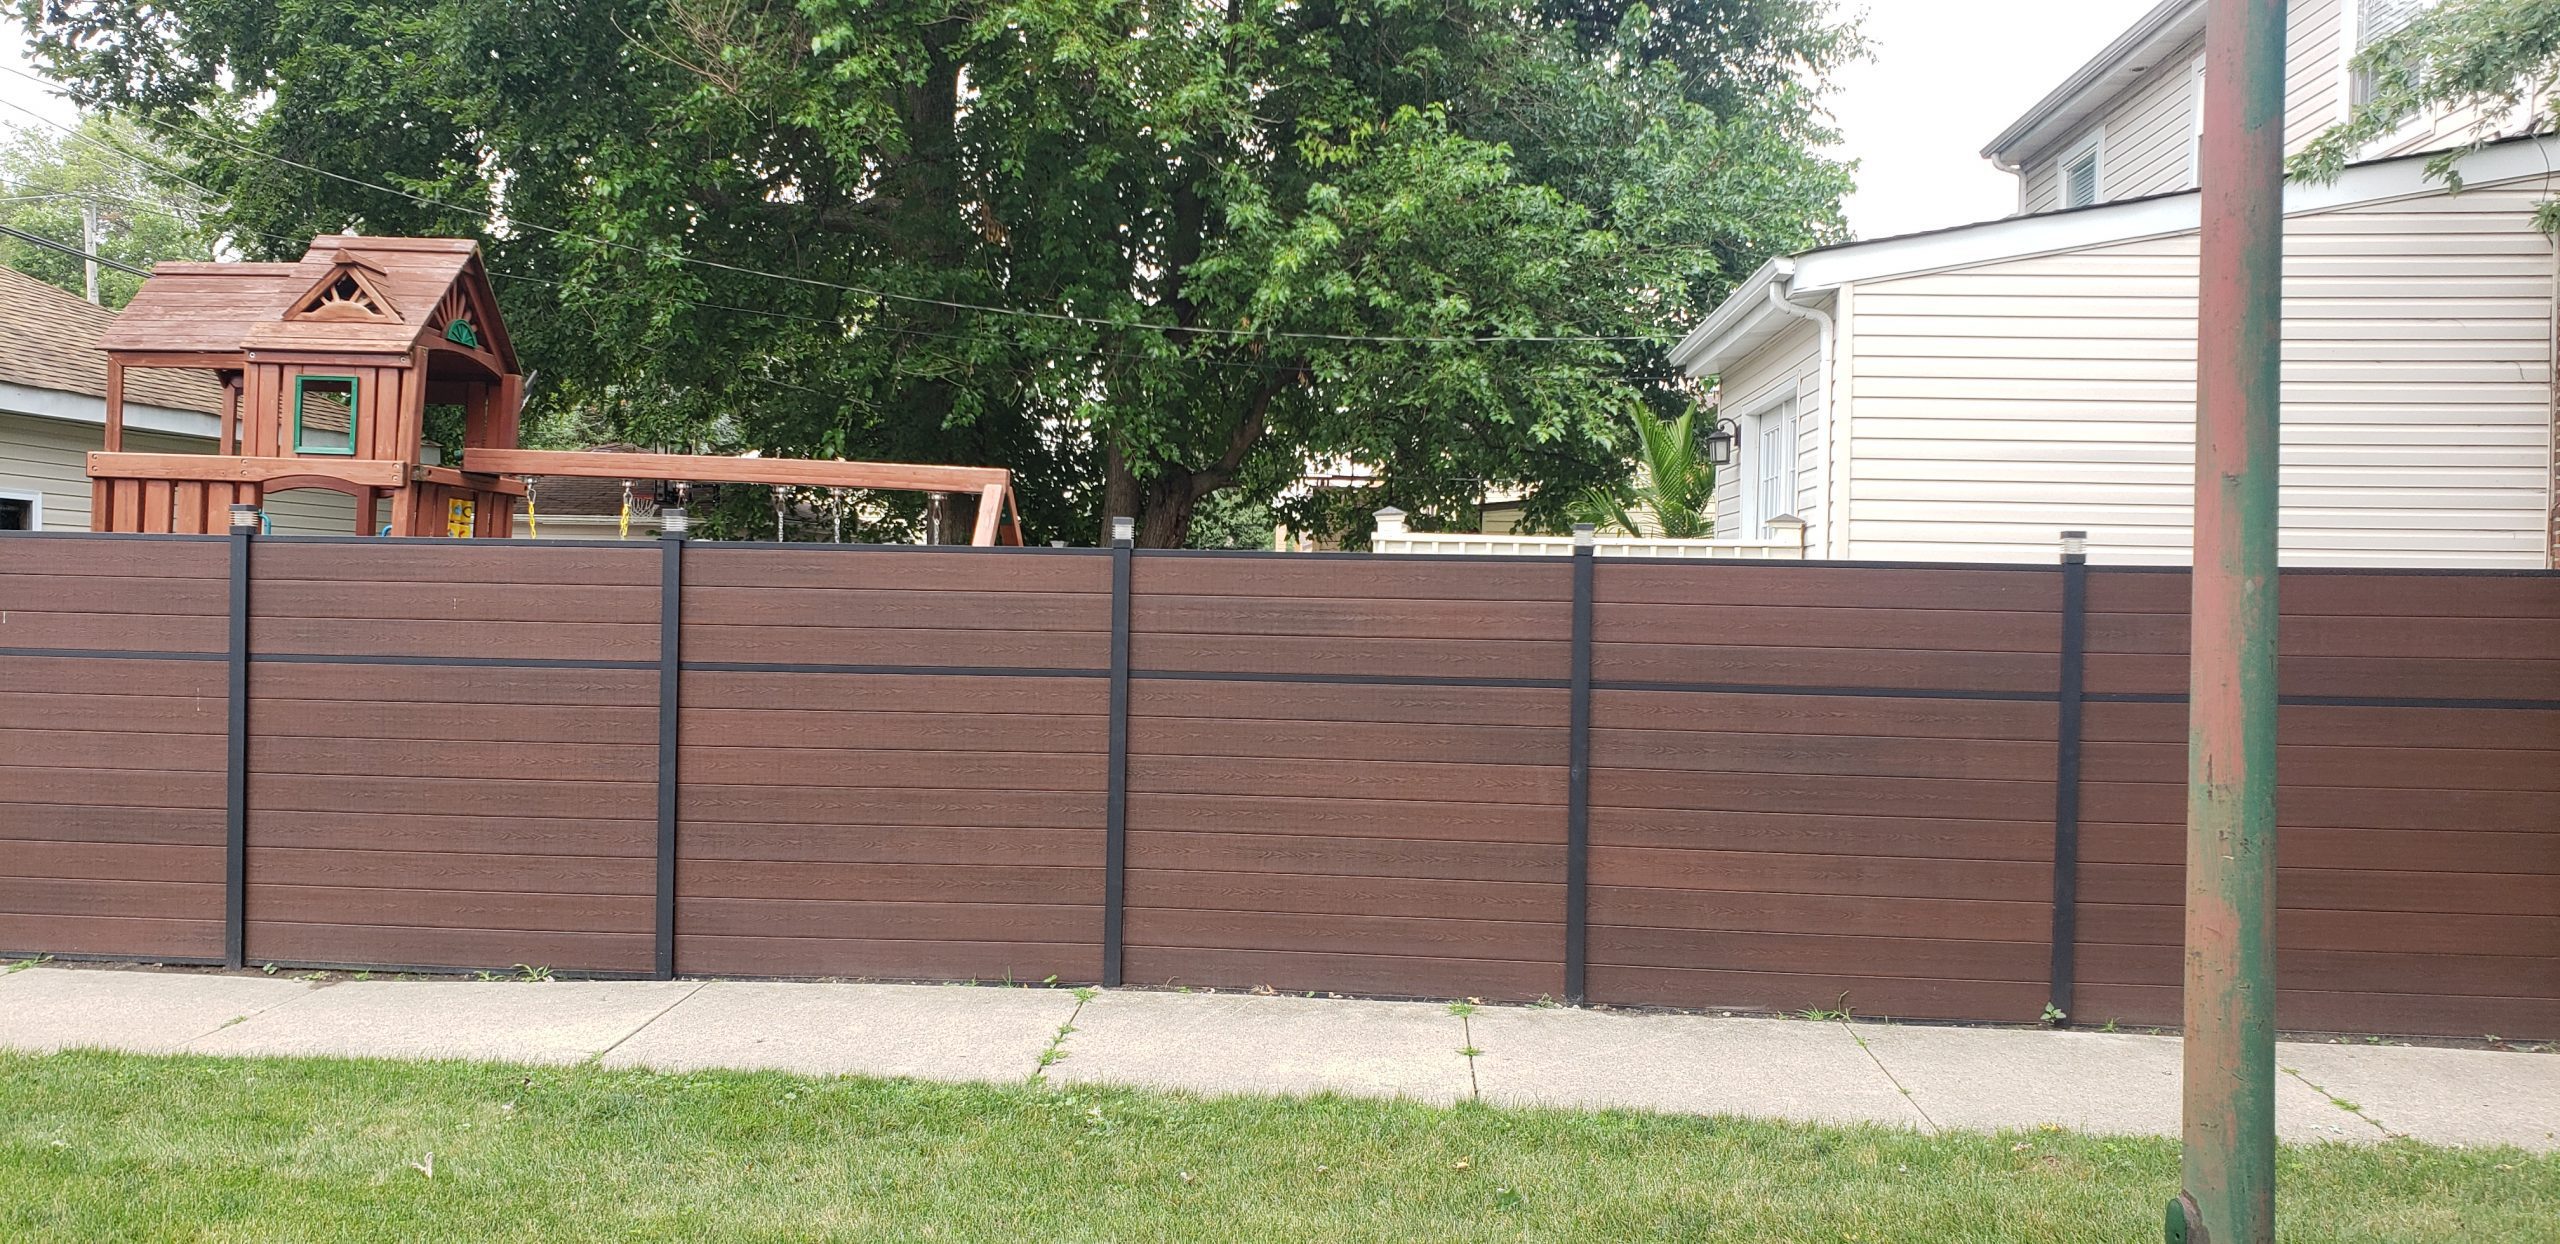 Are Composite Fences Ecofriendly?